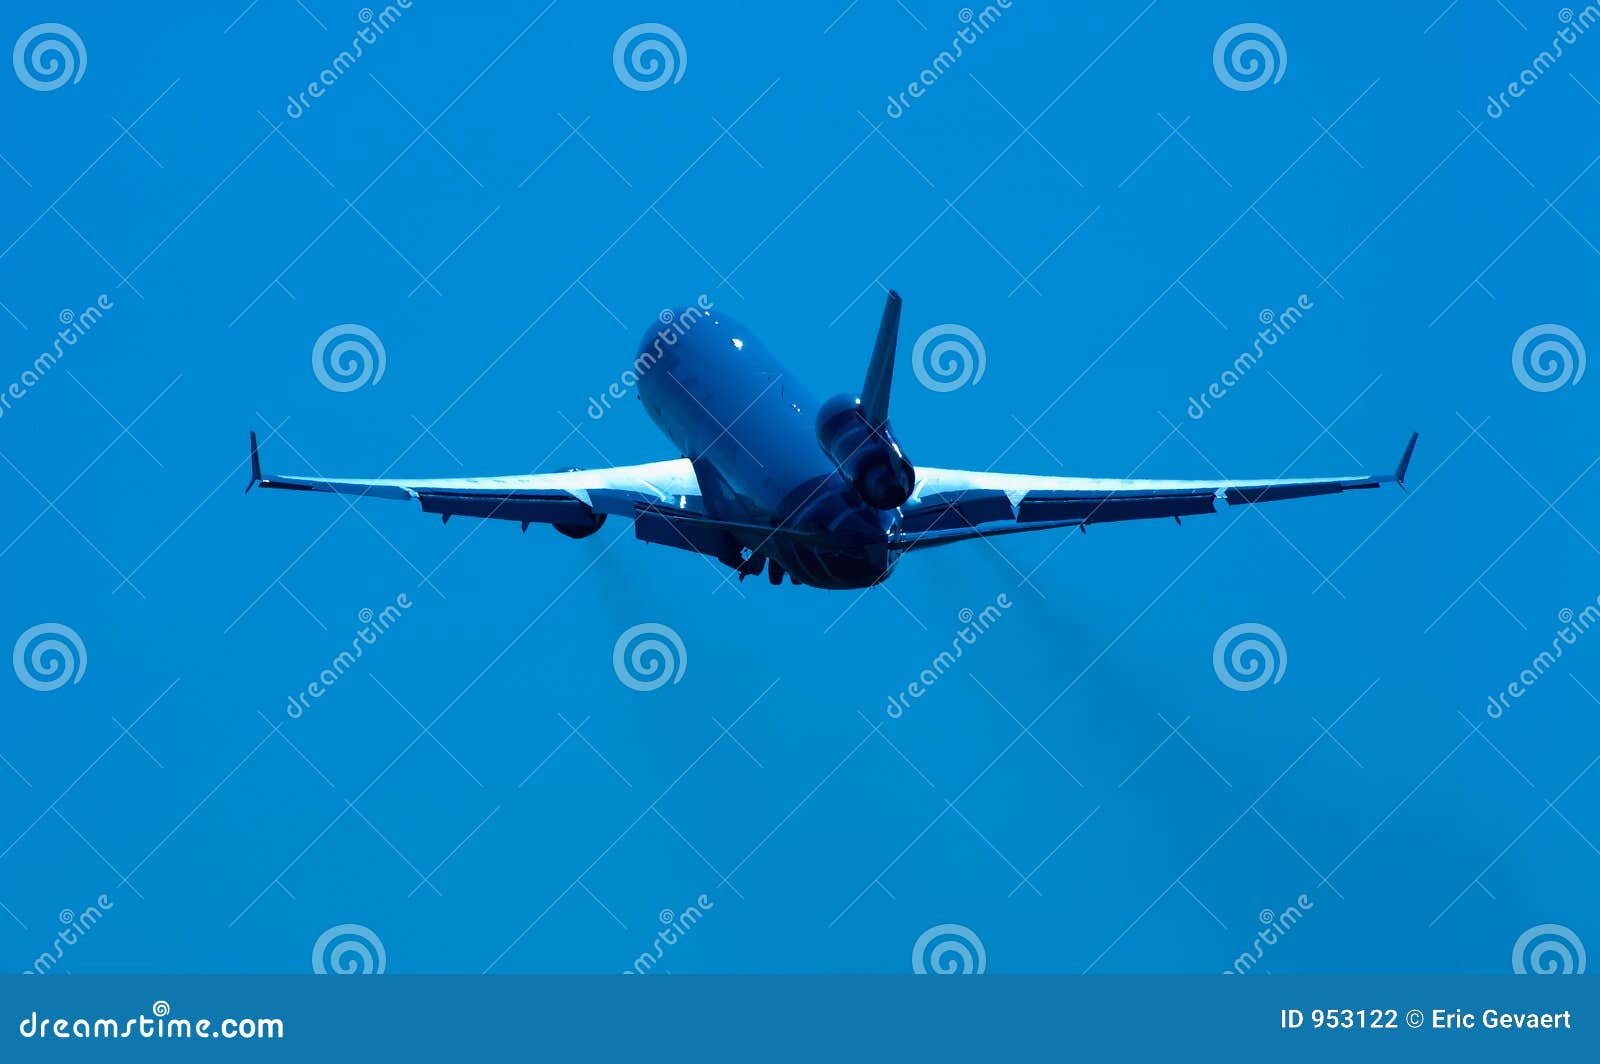 plane on takeoff